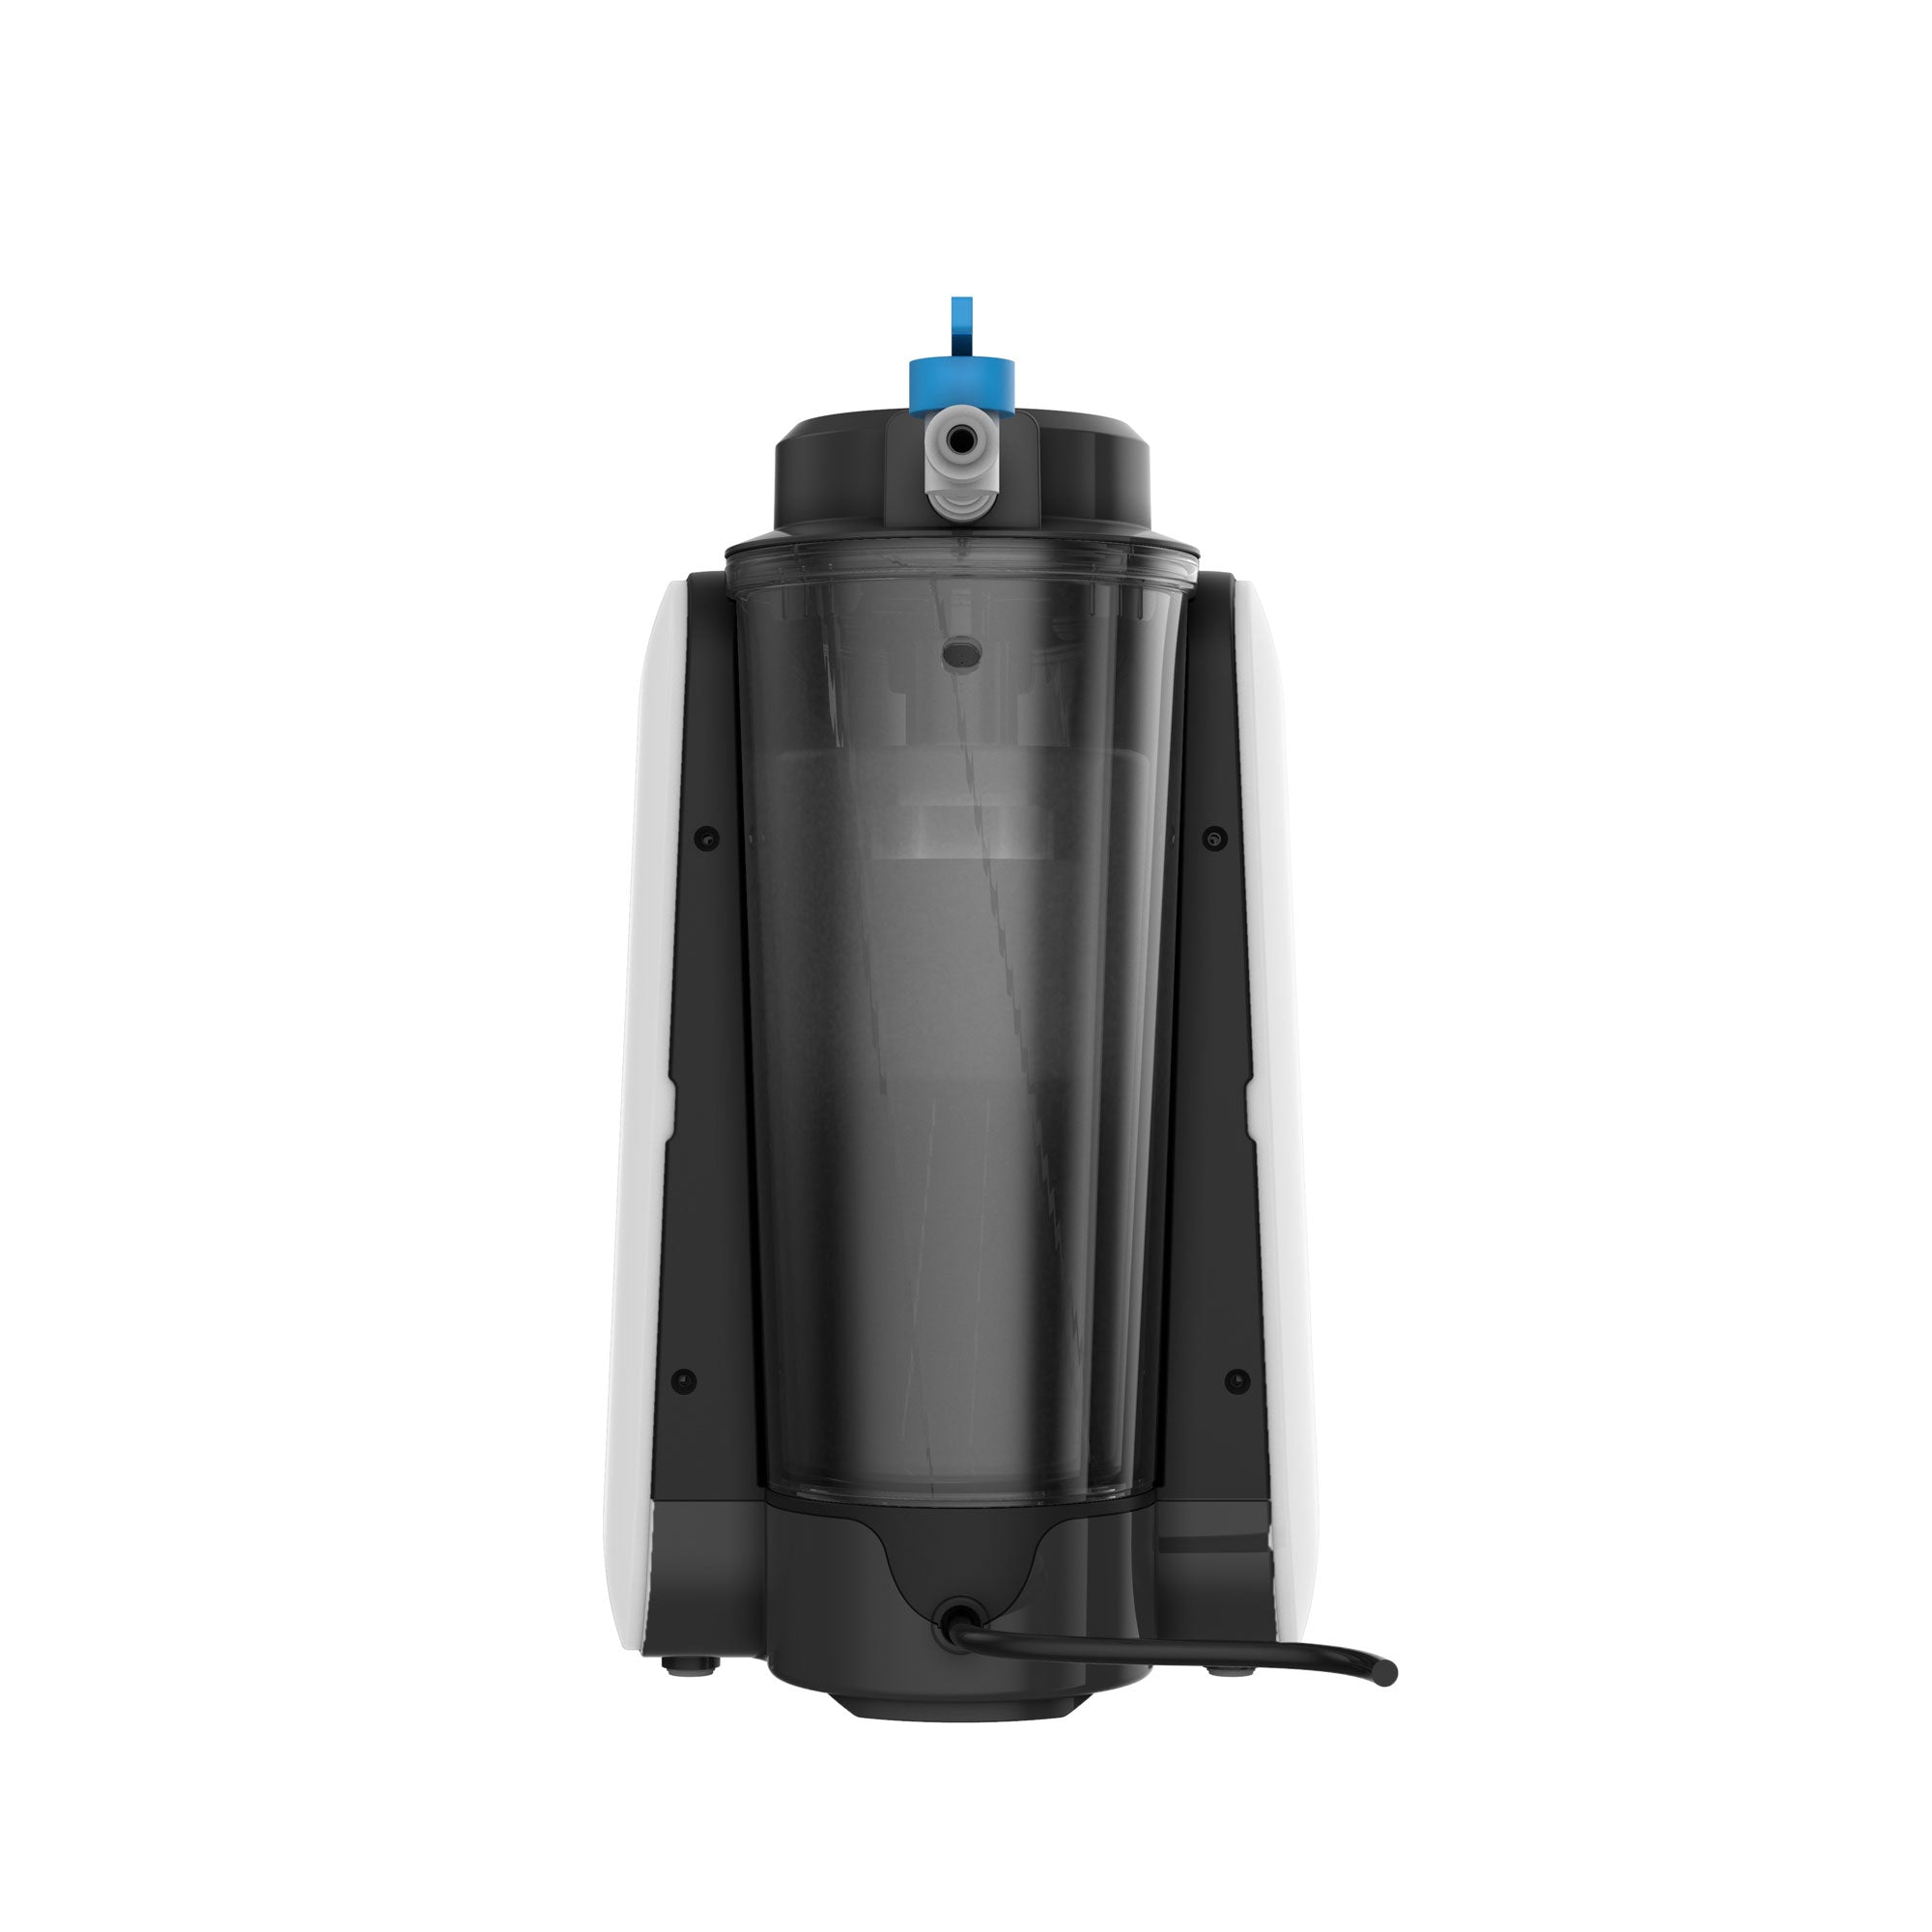 Portable Black ESPRESSO Machine- Premium - Drinkpod